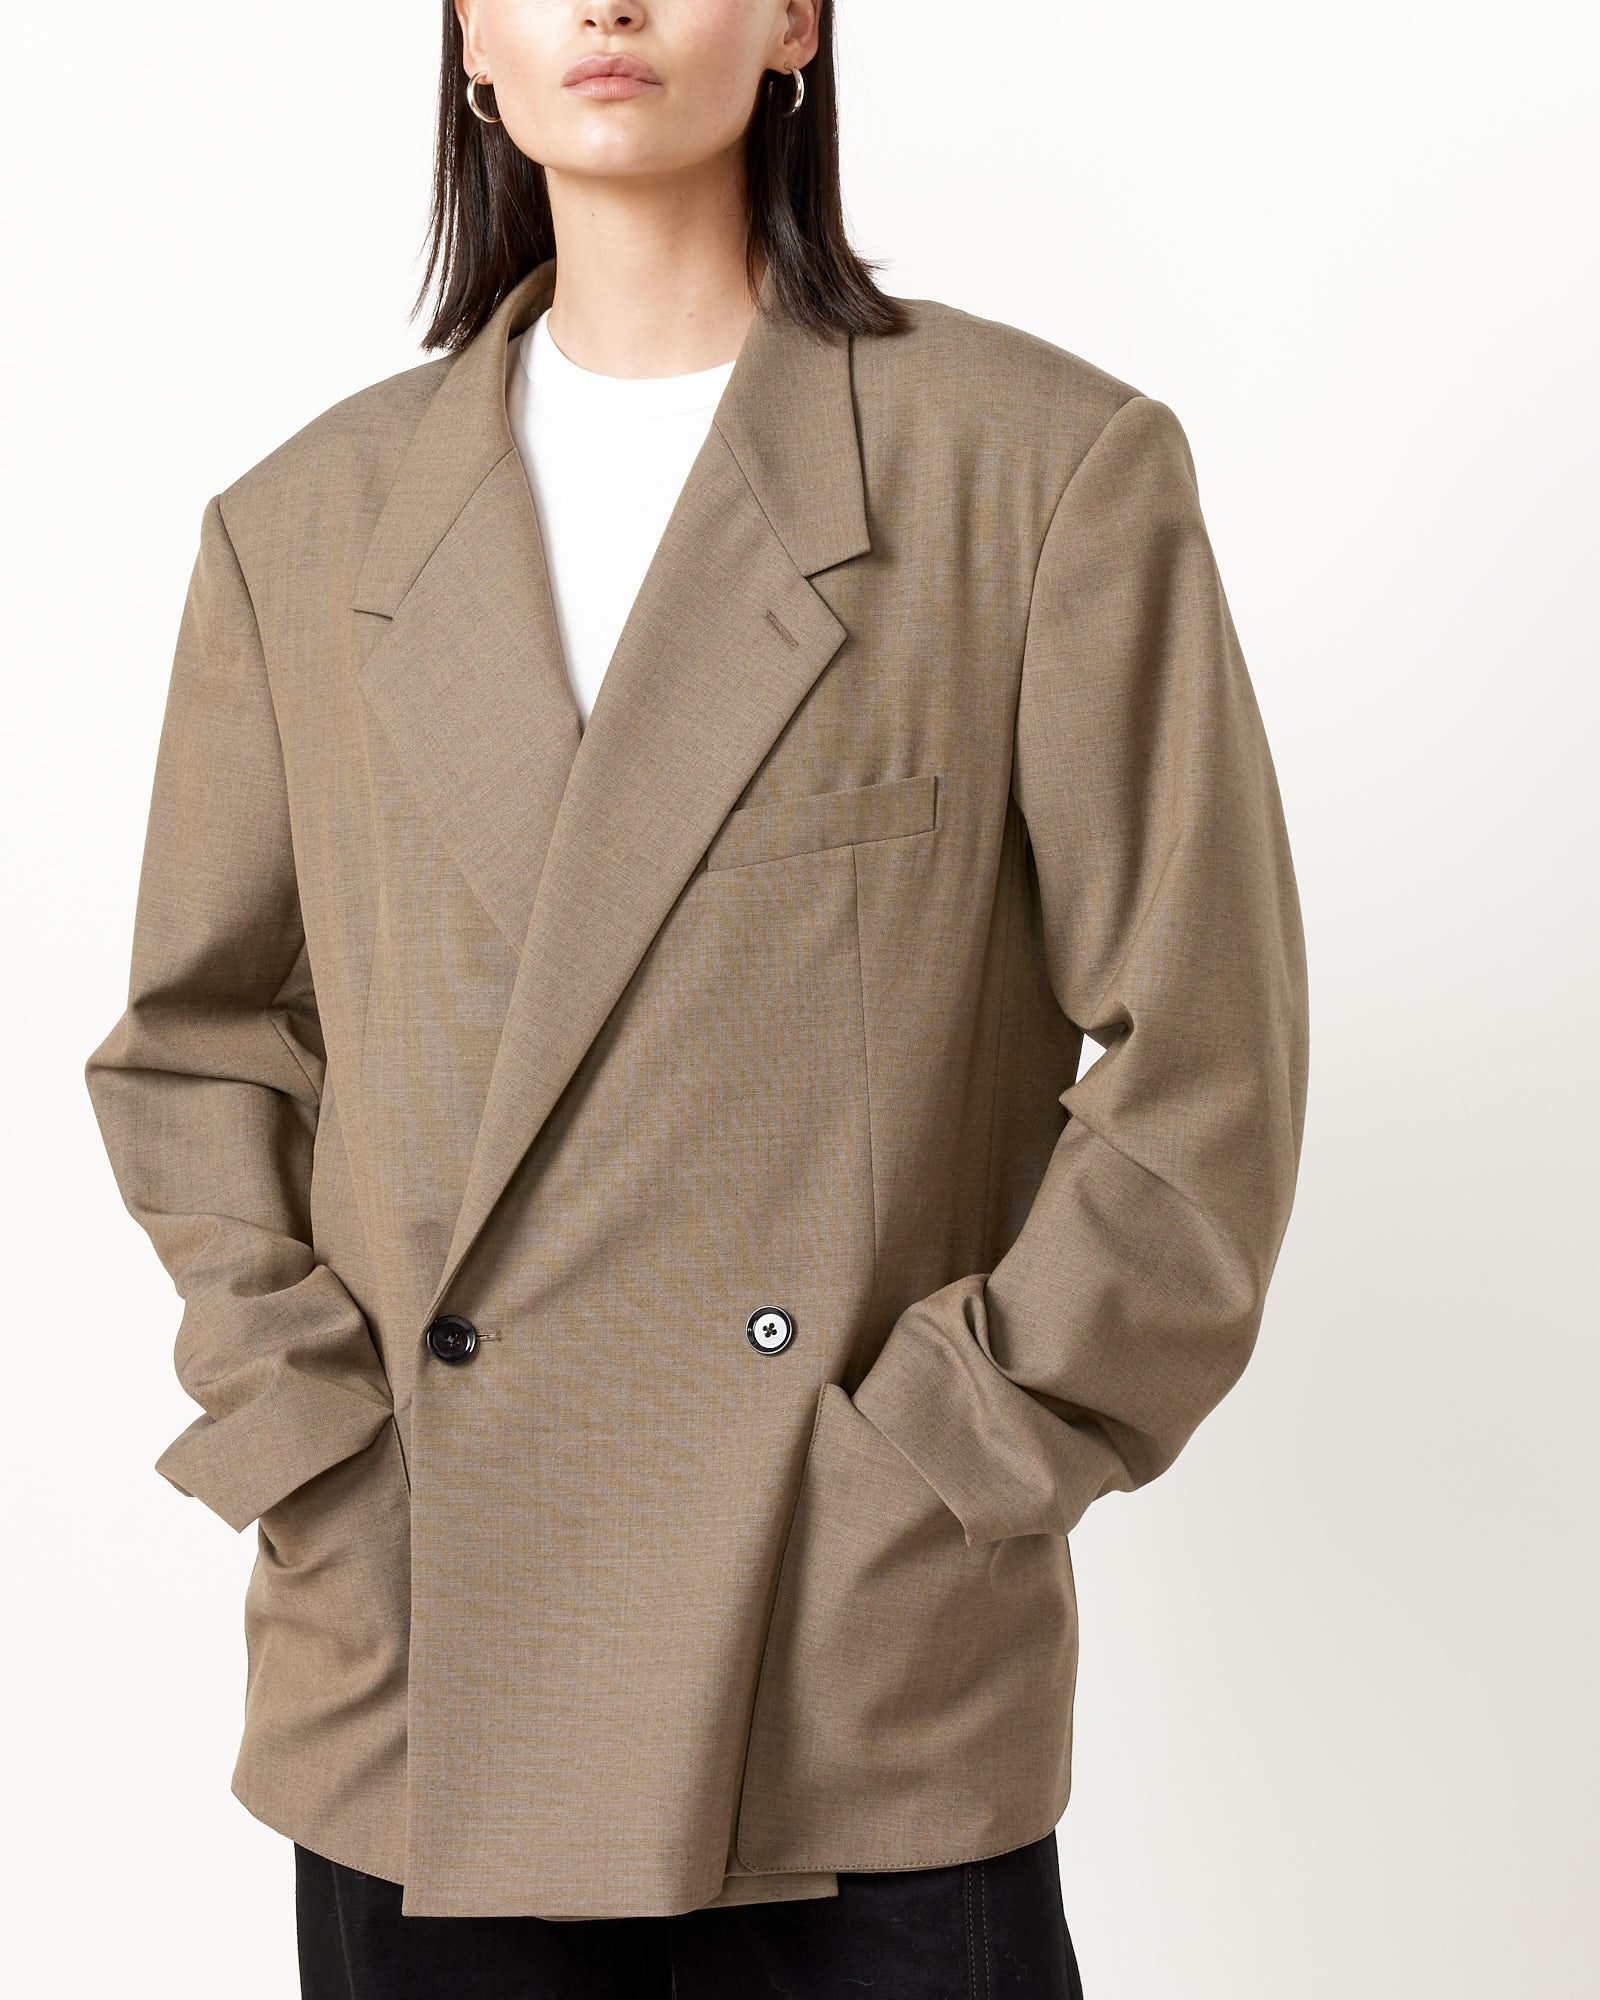 Soft Tailored Jacket